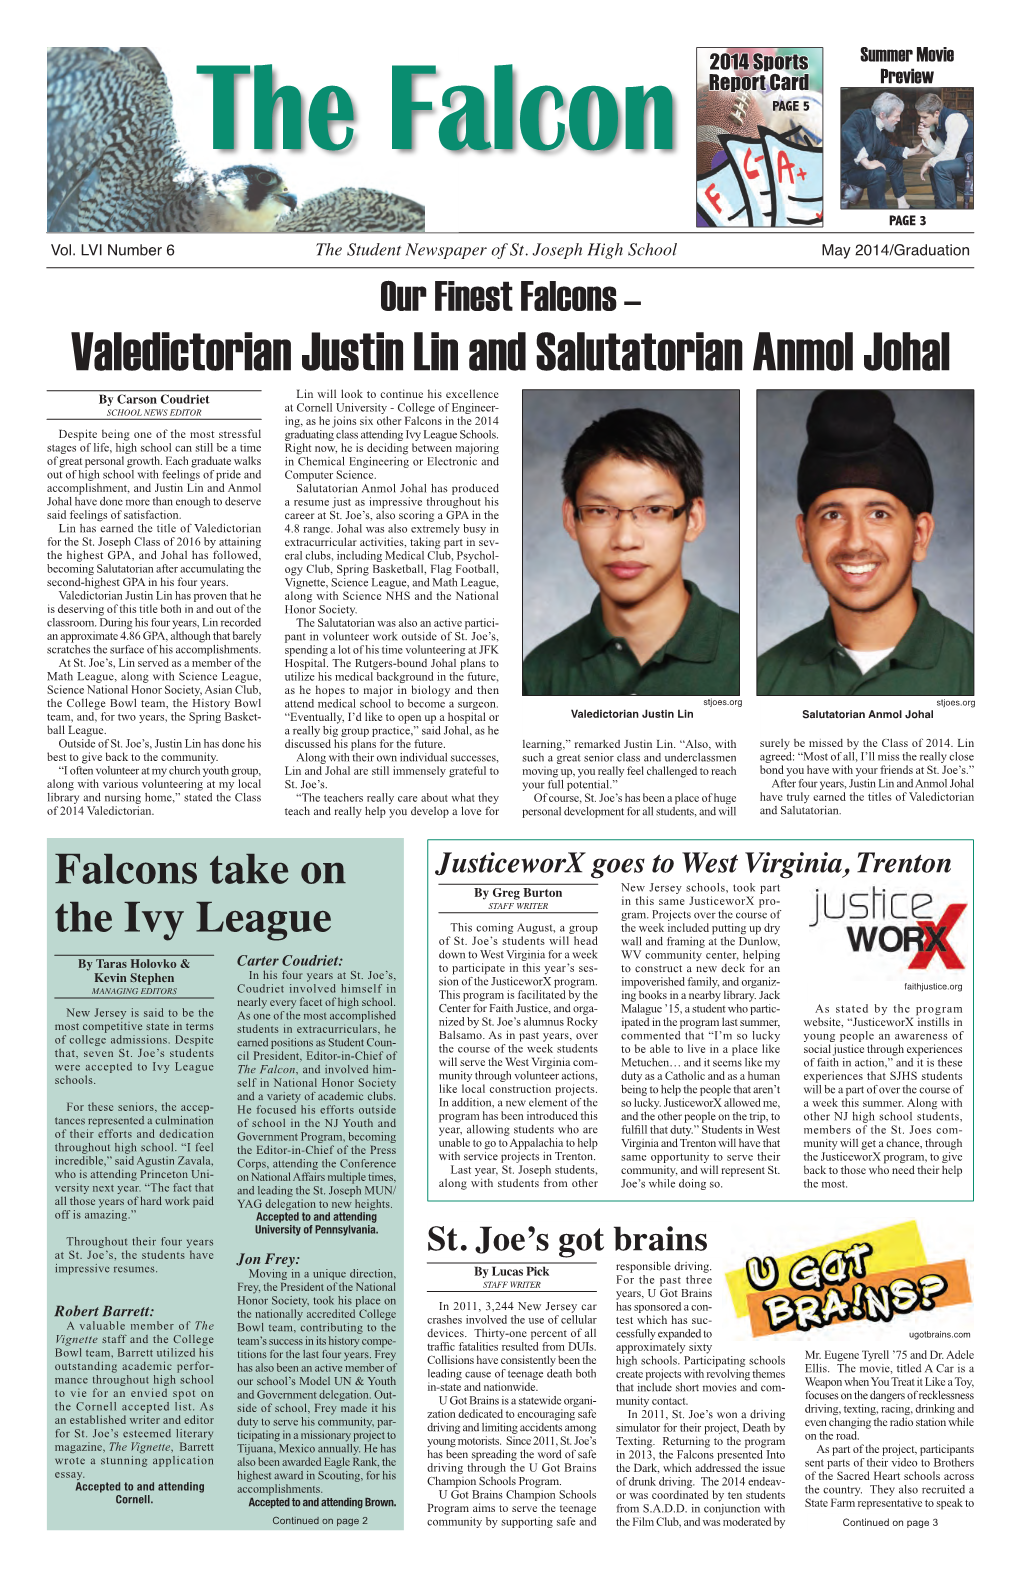 Valedictorian Justin Lin and Salutatorian Anmol Johal